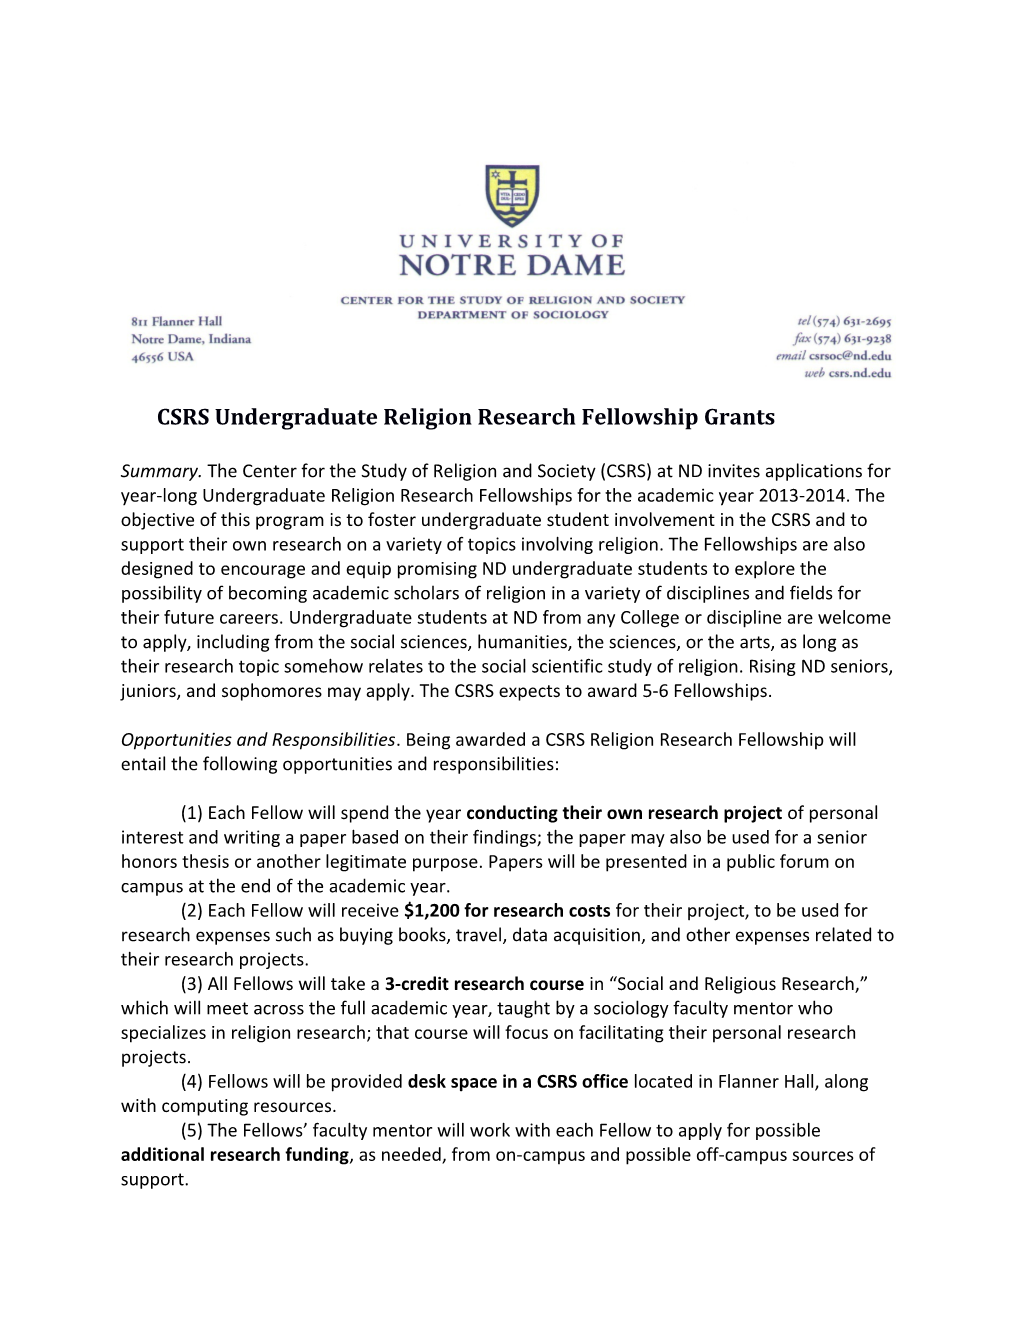 CSRS Undergraduate Religion Research Fellowship Grants